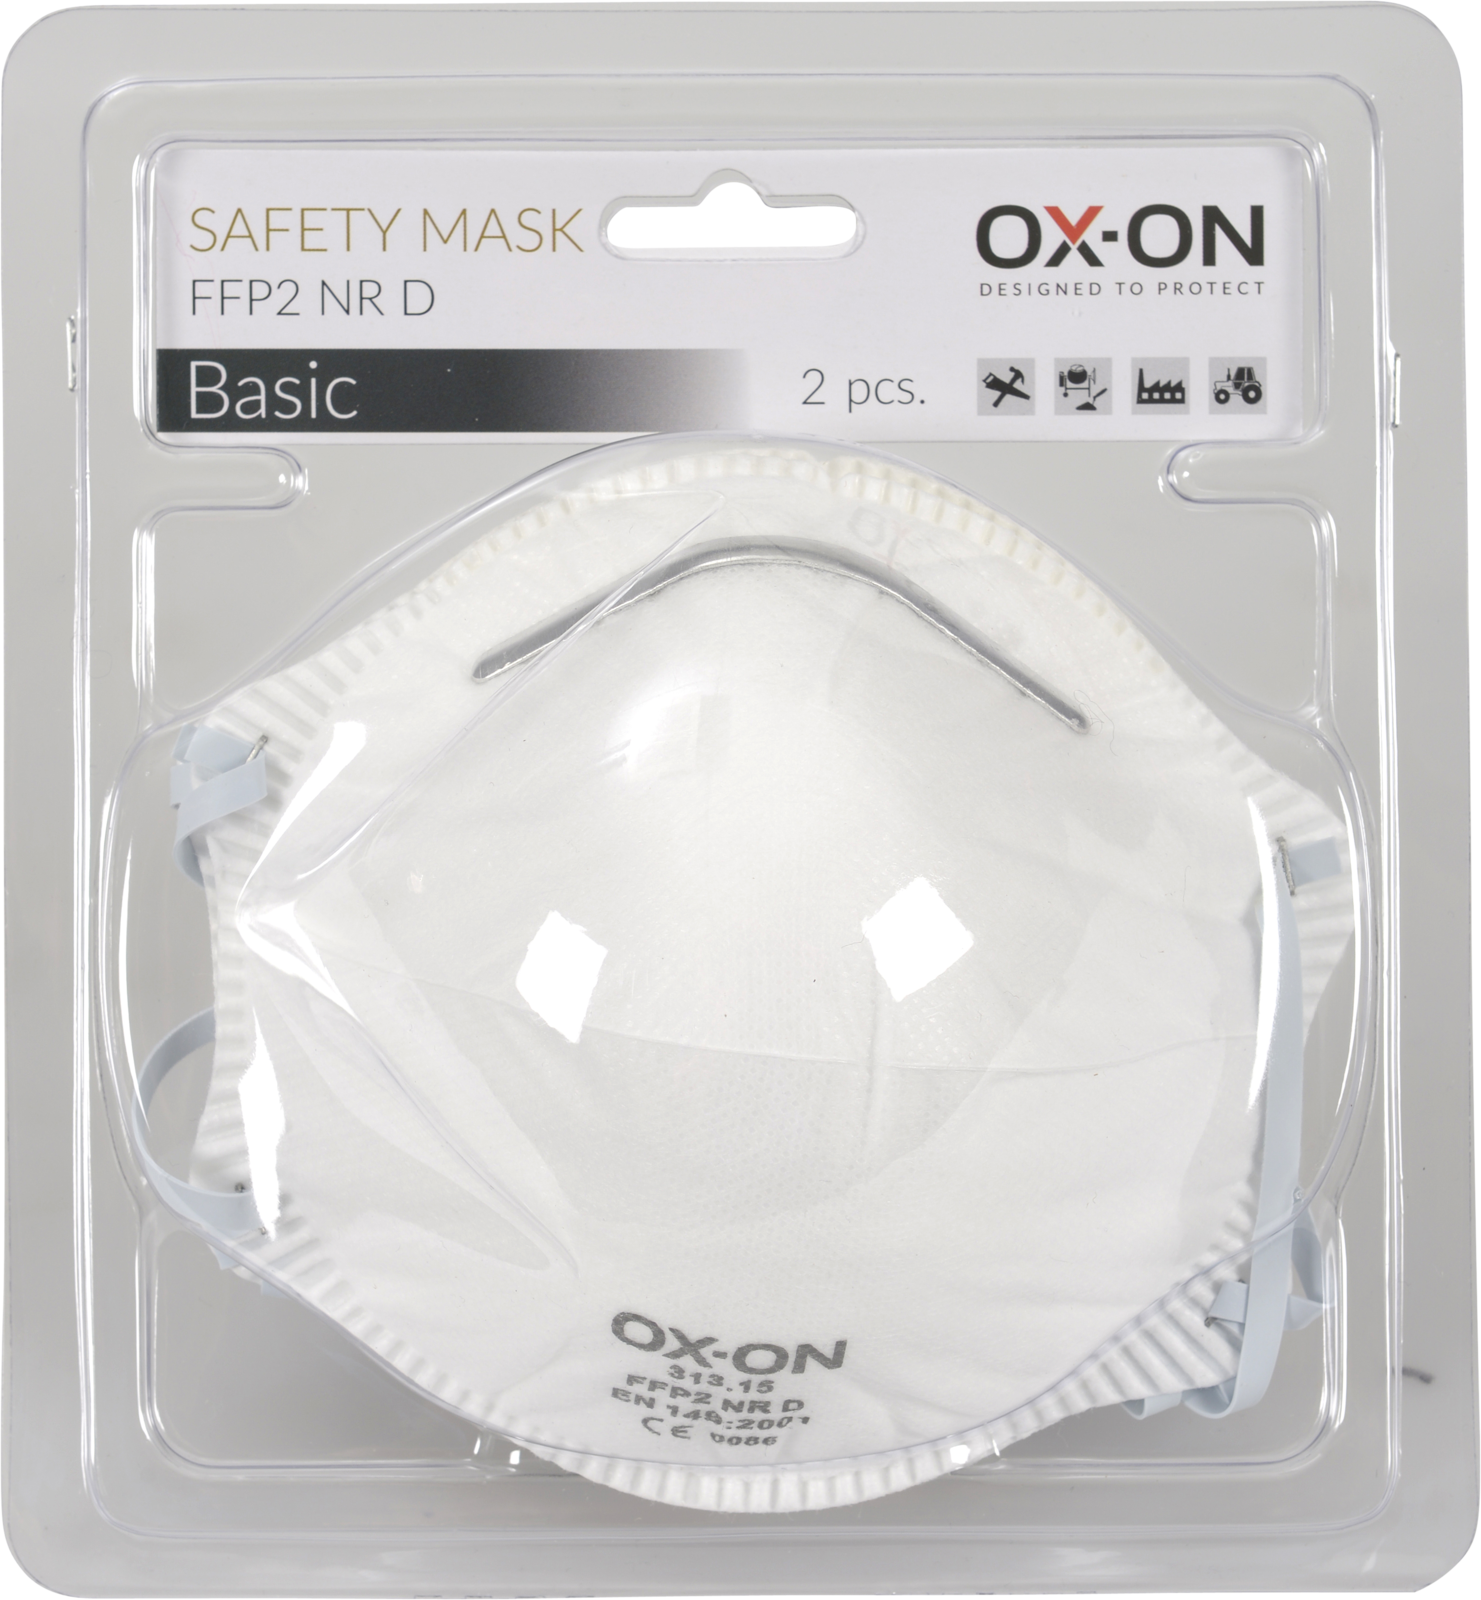 OX-ON Mask FFP2NR D Basic 313.16